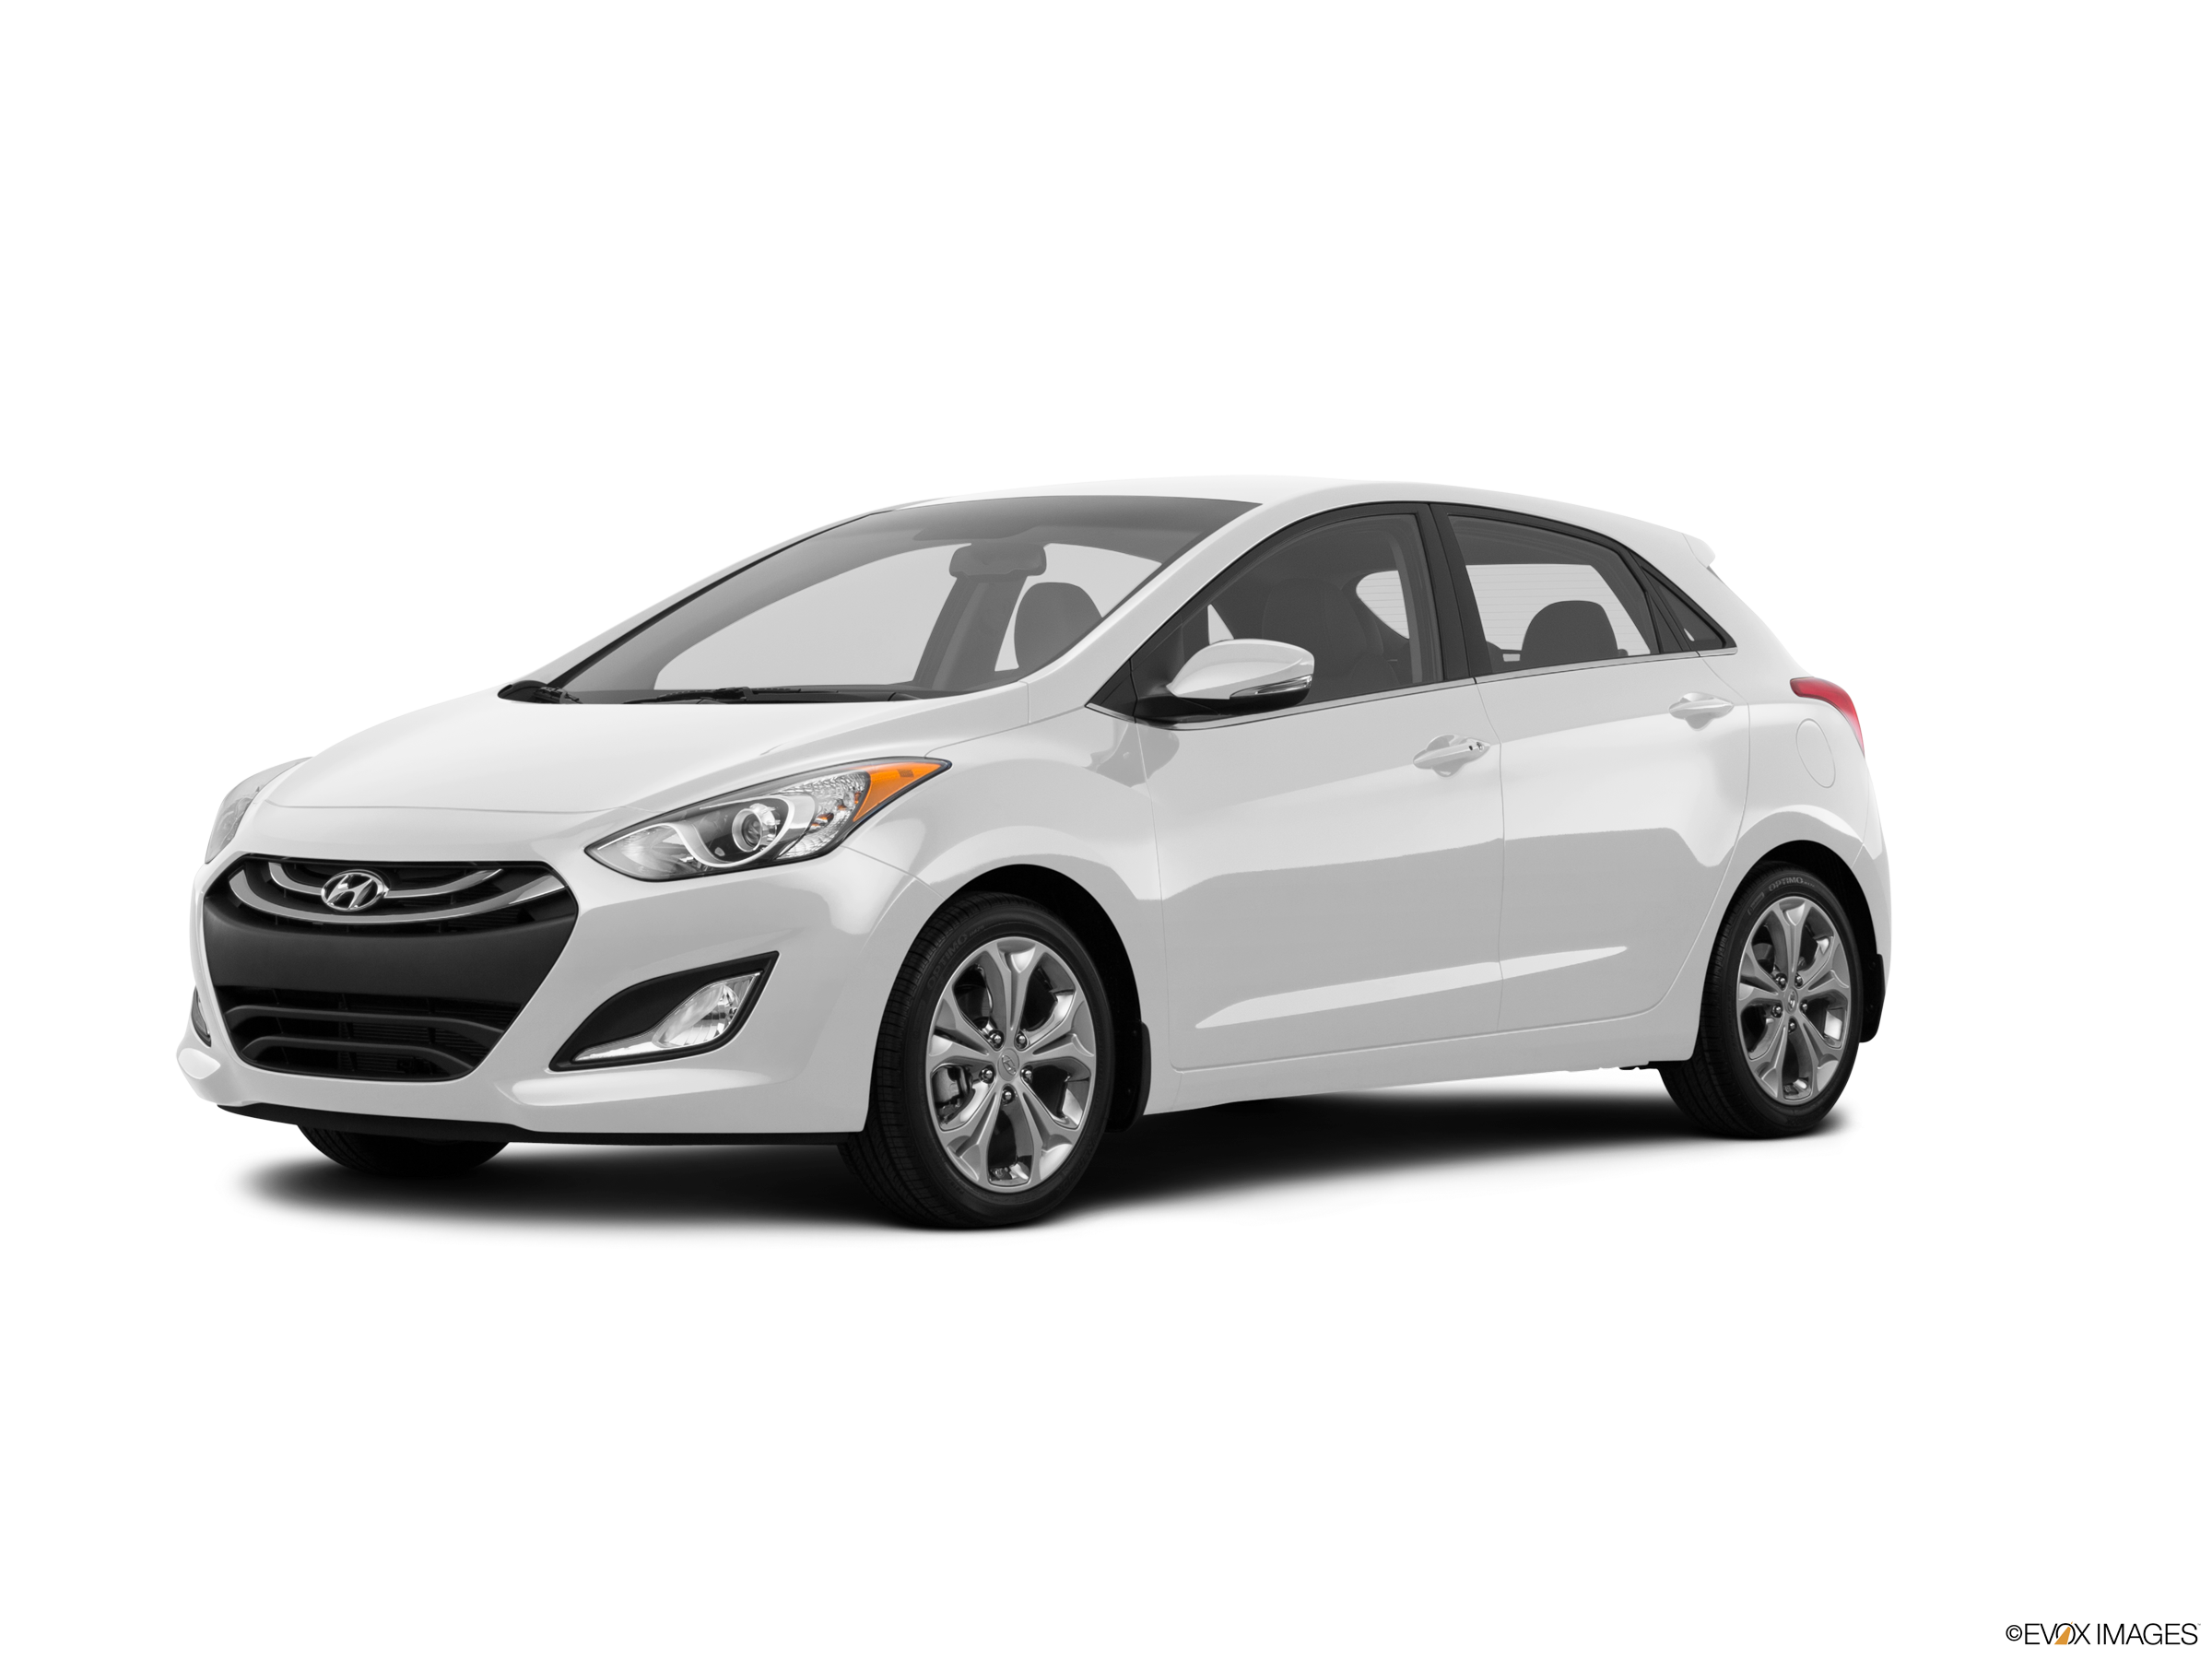 2015 Hyundai Elantra Gt Price Kbb Value Cars For Sale Kelley Blue Book